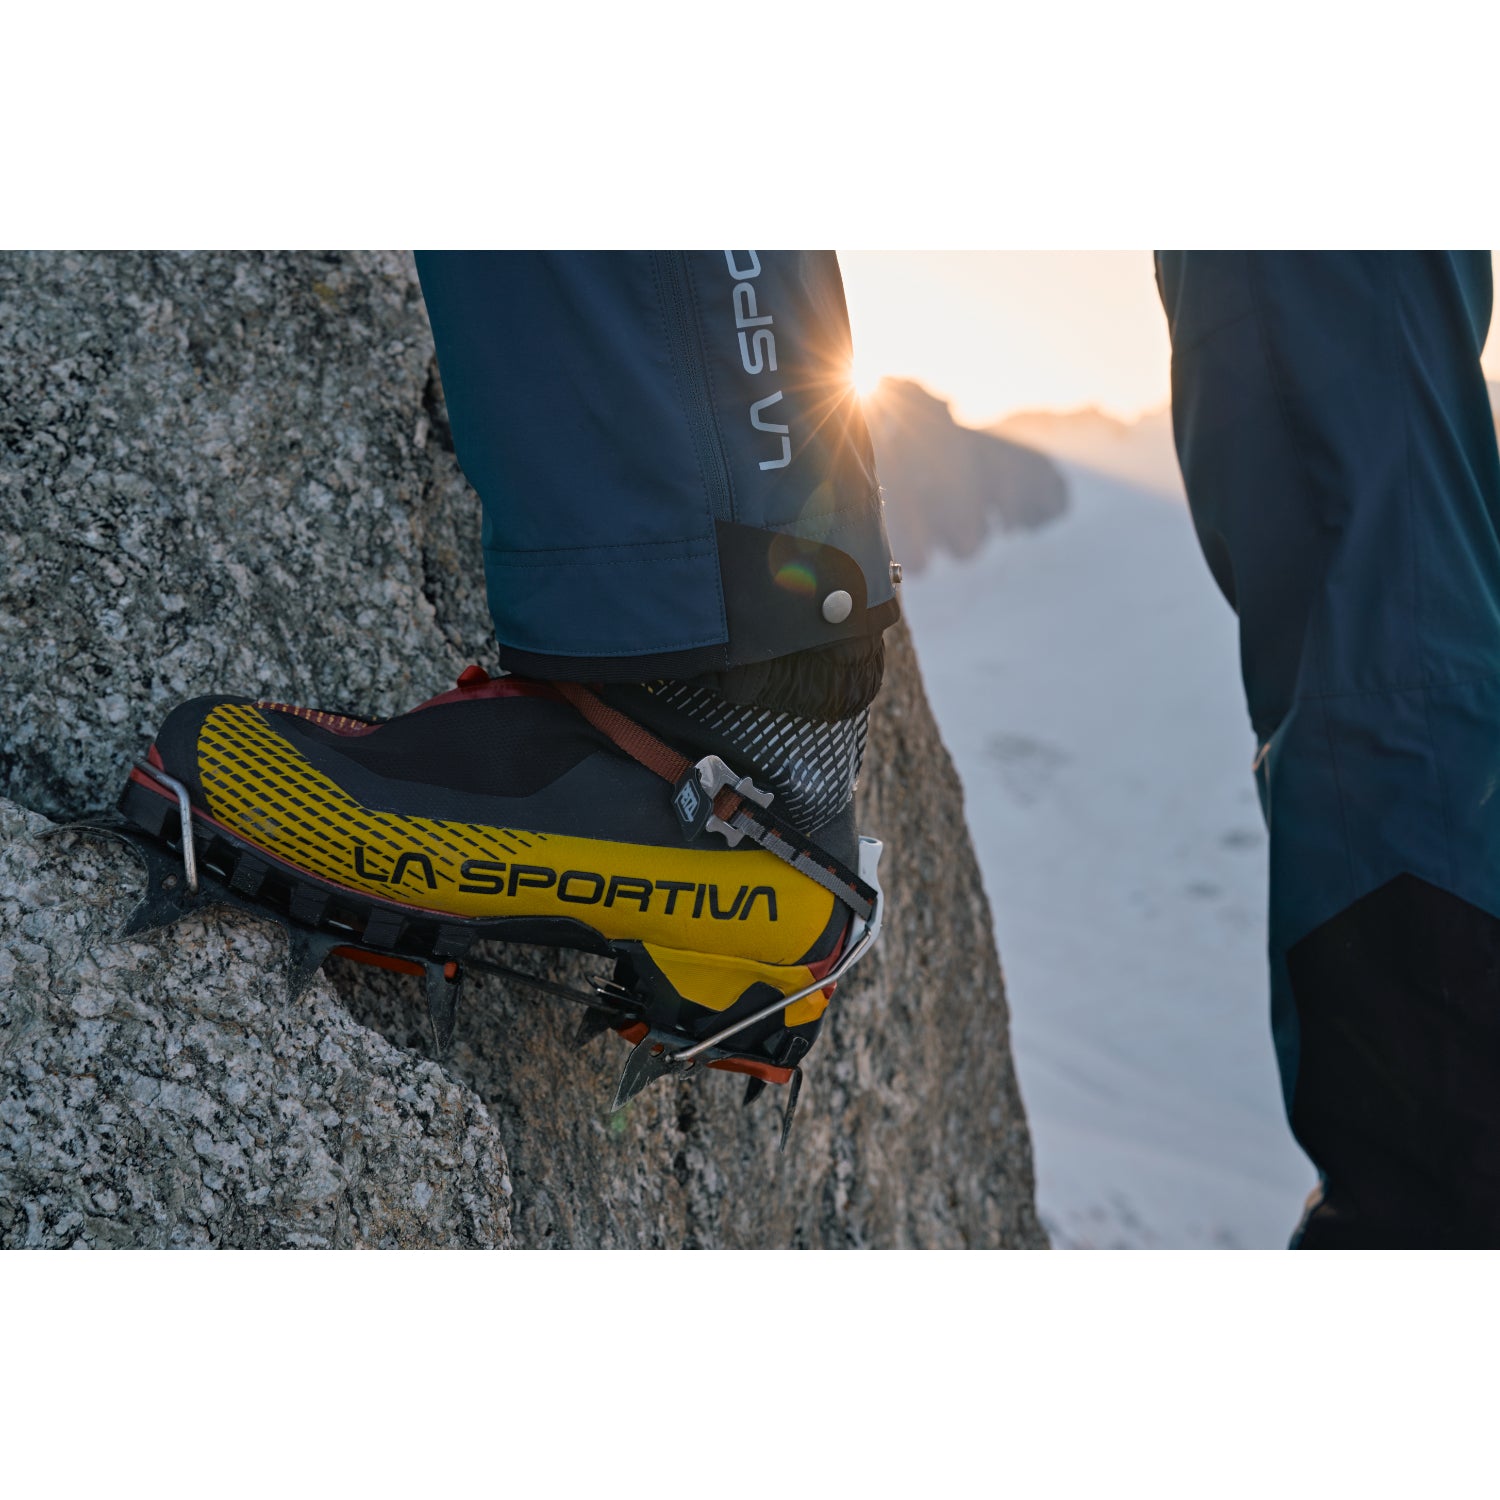 La Sportiva G-Tech Mountaineering Boot | Buy Now at Rock+Run